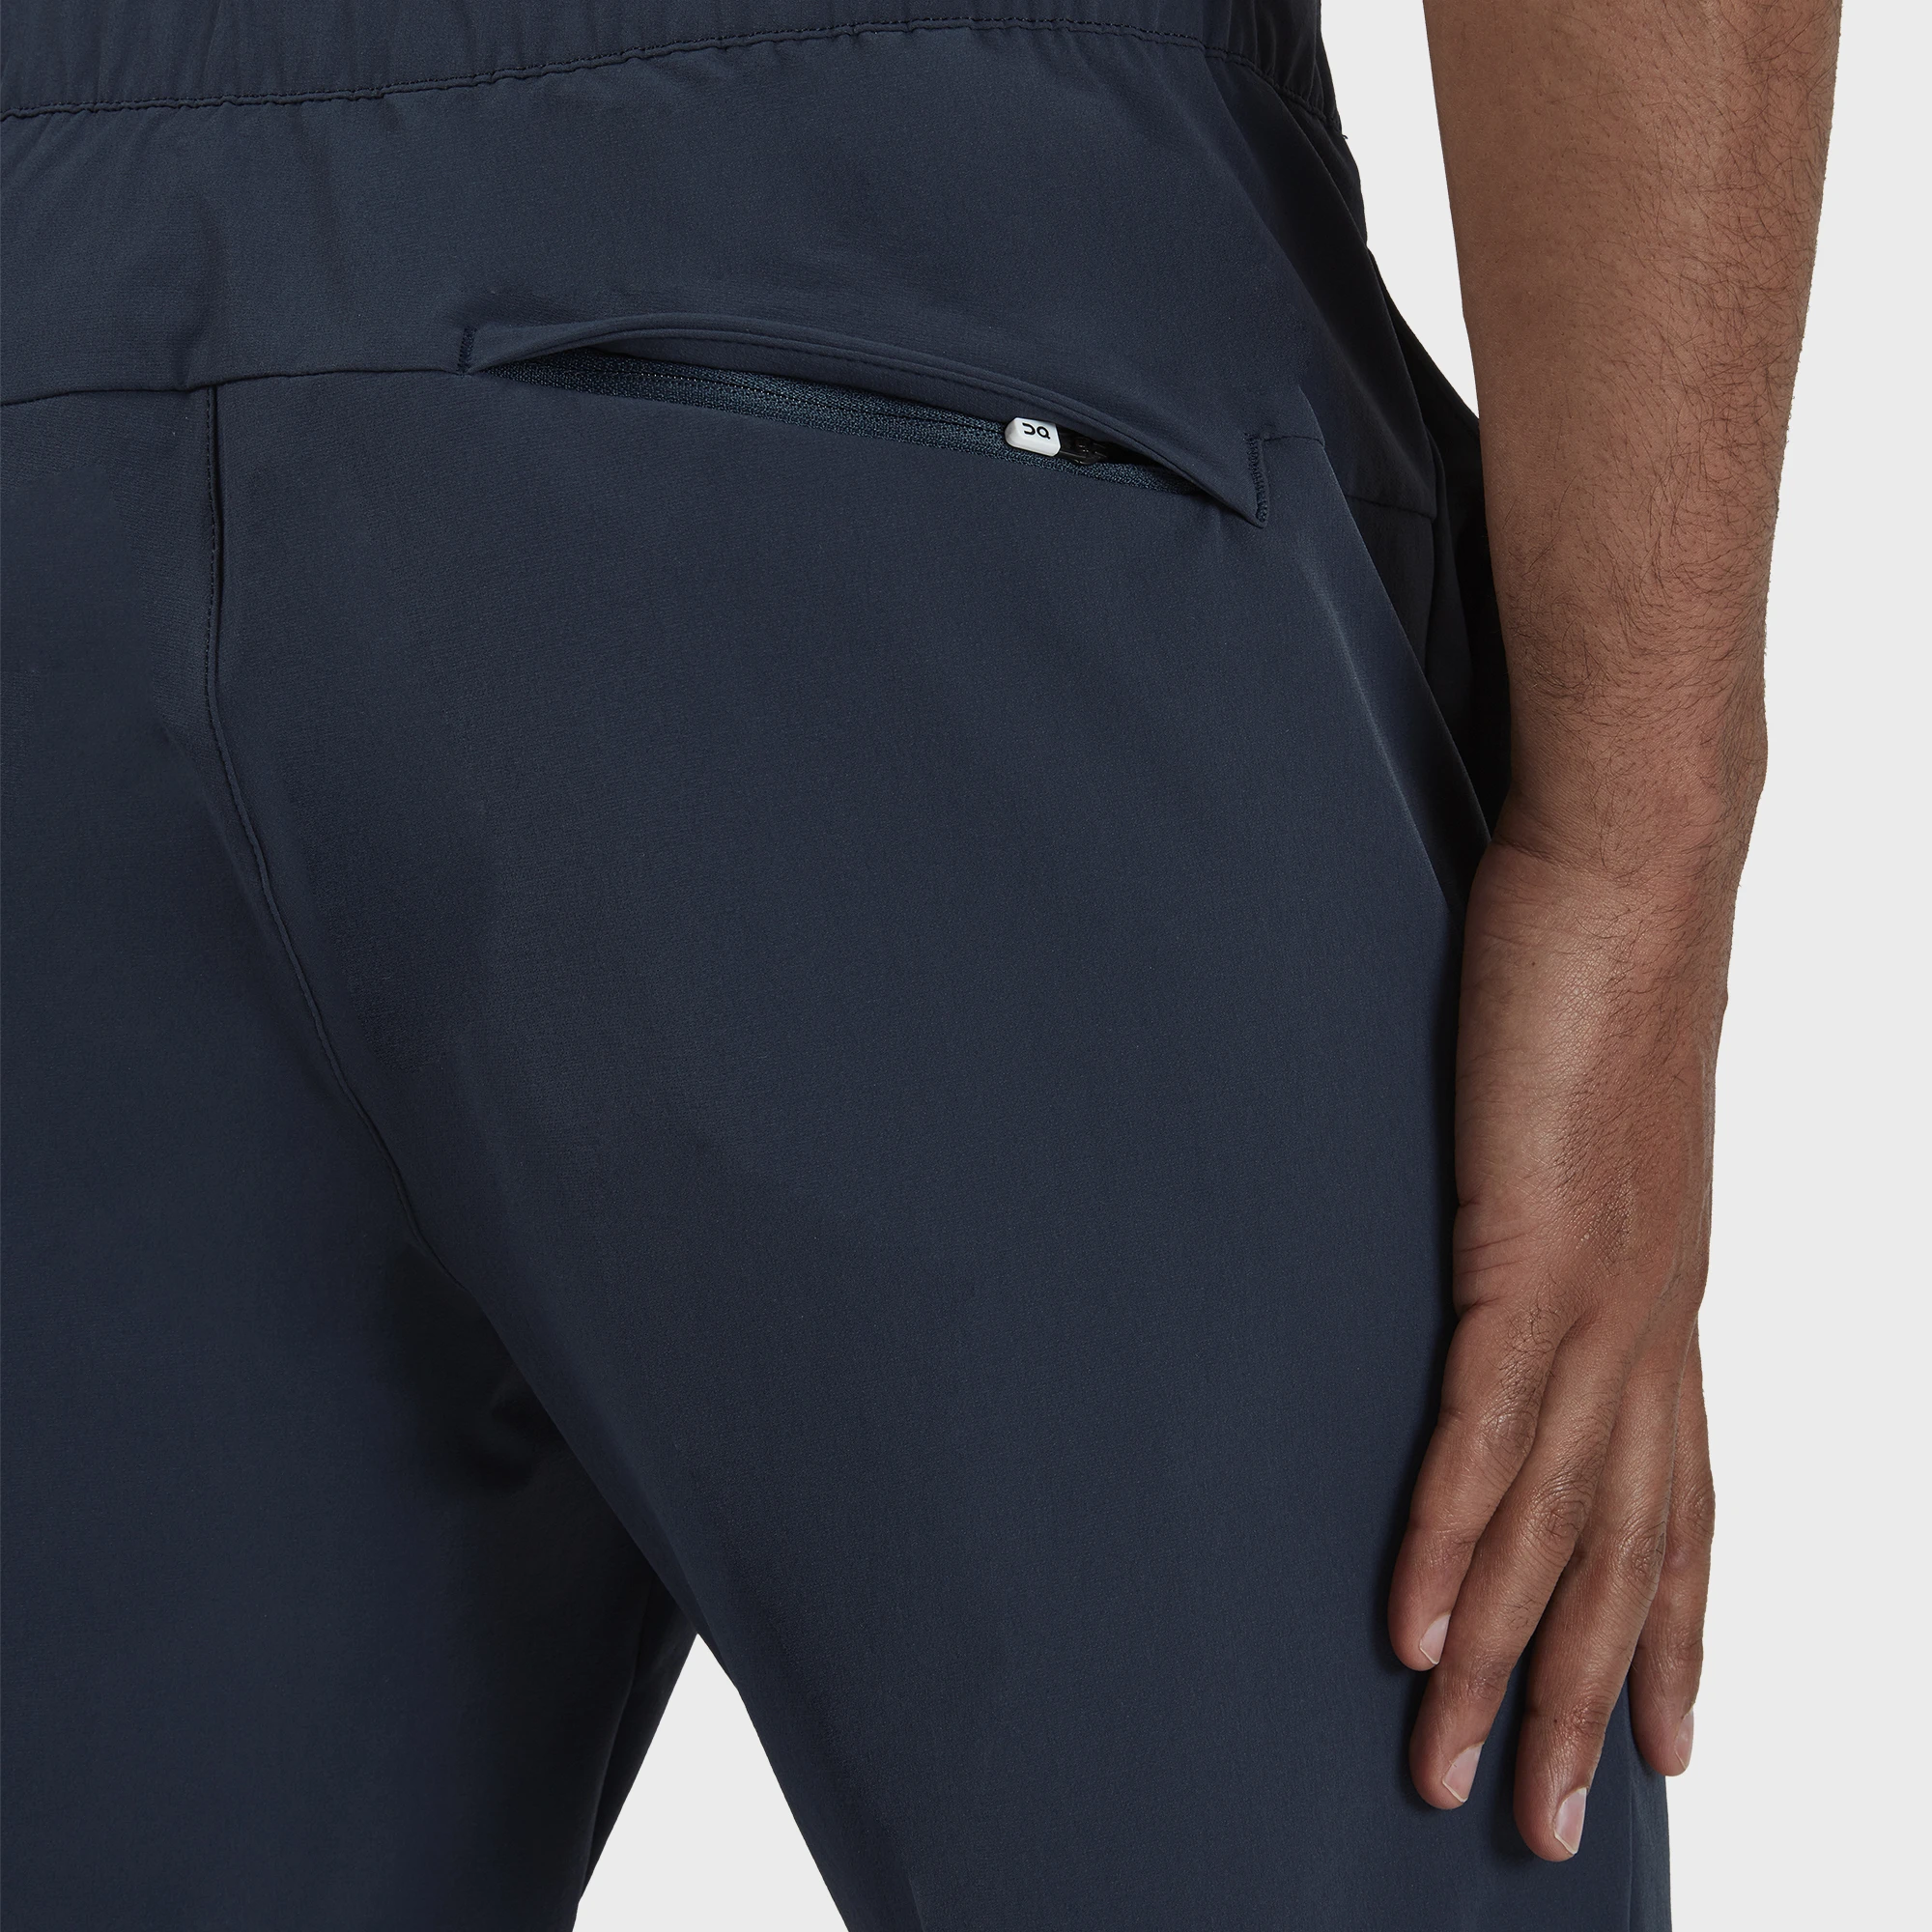 Leadmall Athletic Pants For Men Full Length Pants Mens Autumn